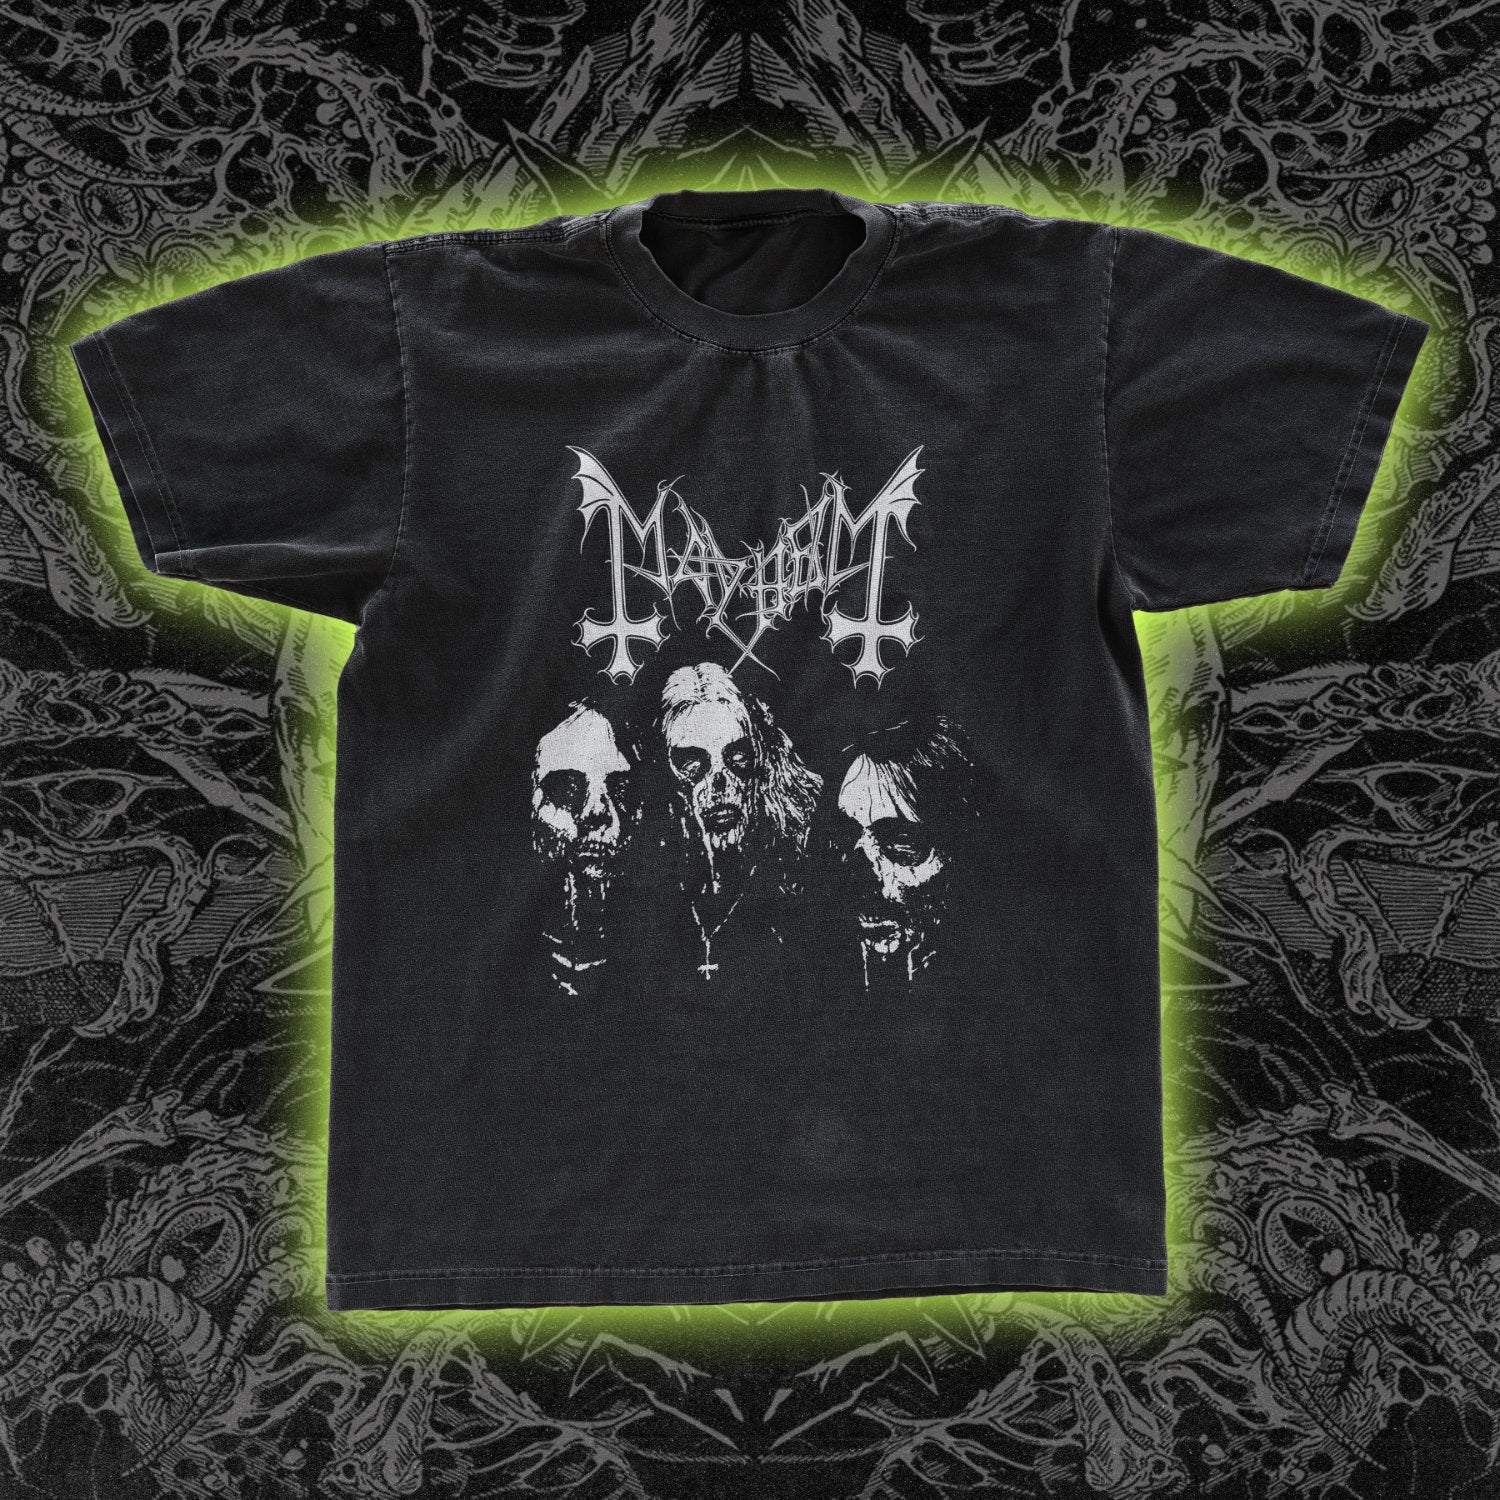 Mayhem Black Metal, Occult & Obscure Clothing